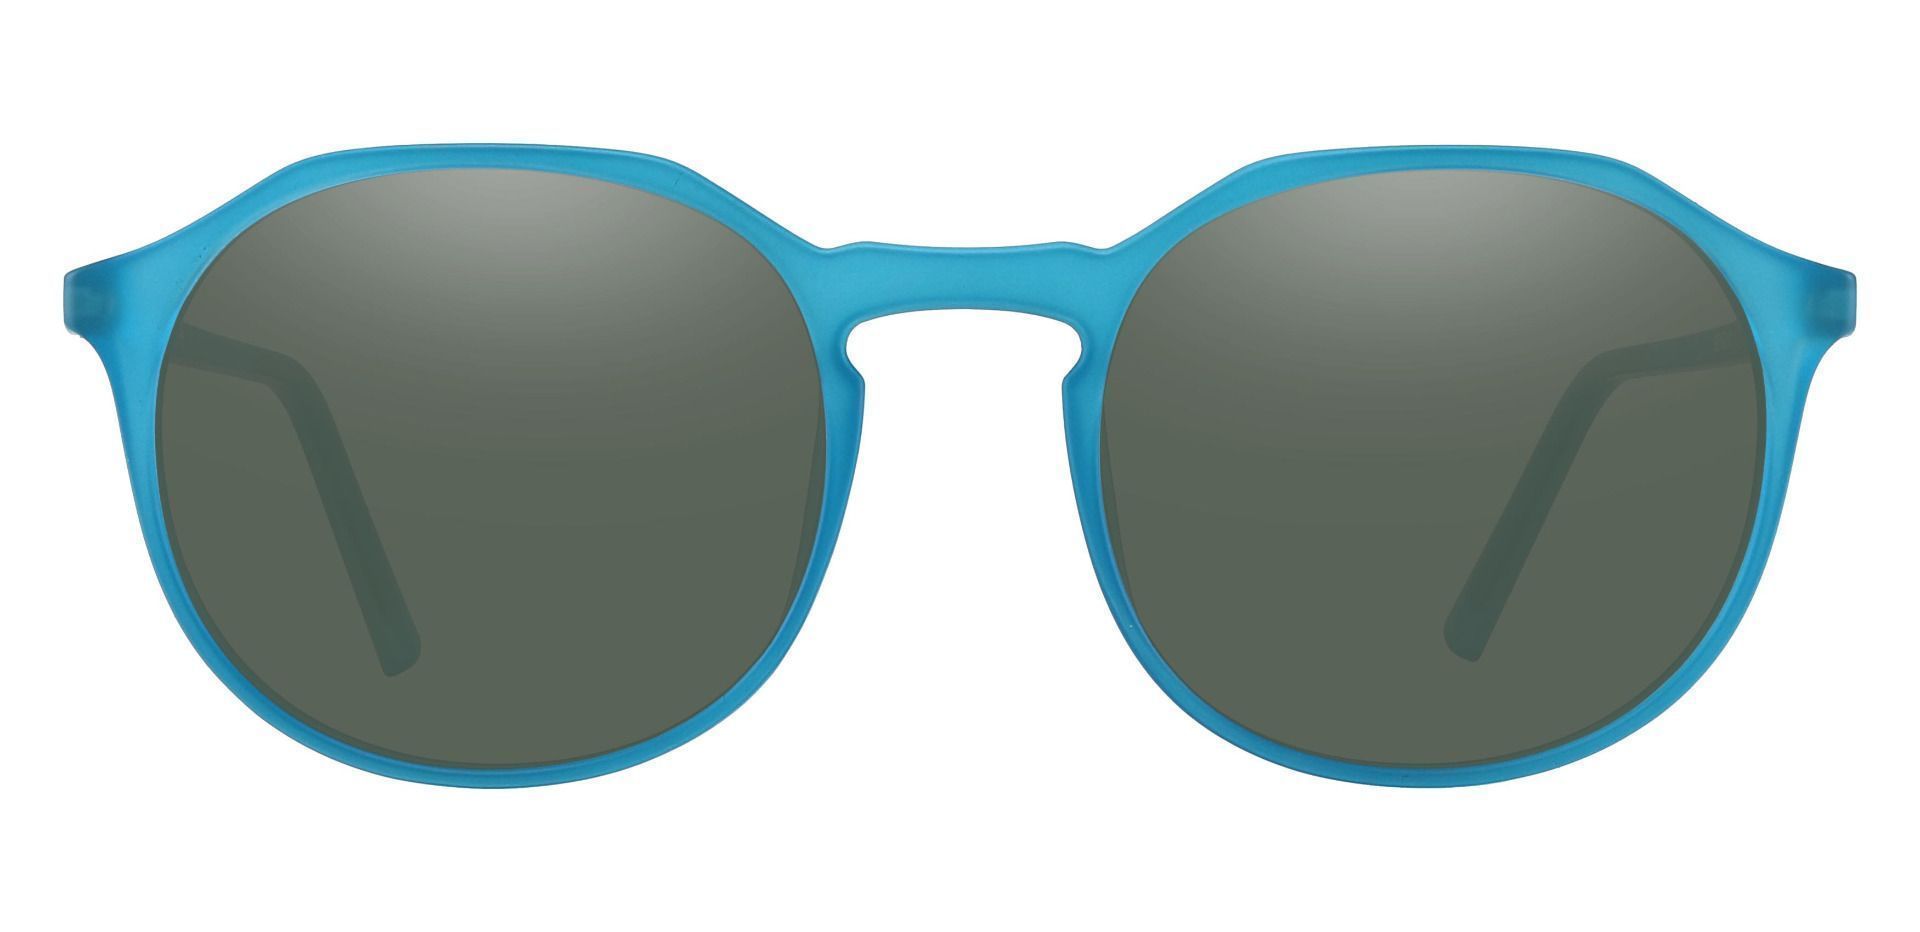 Belvidere Geometric Prescription Sunglasses - Blue Frame With Green Lenses